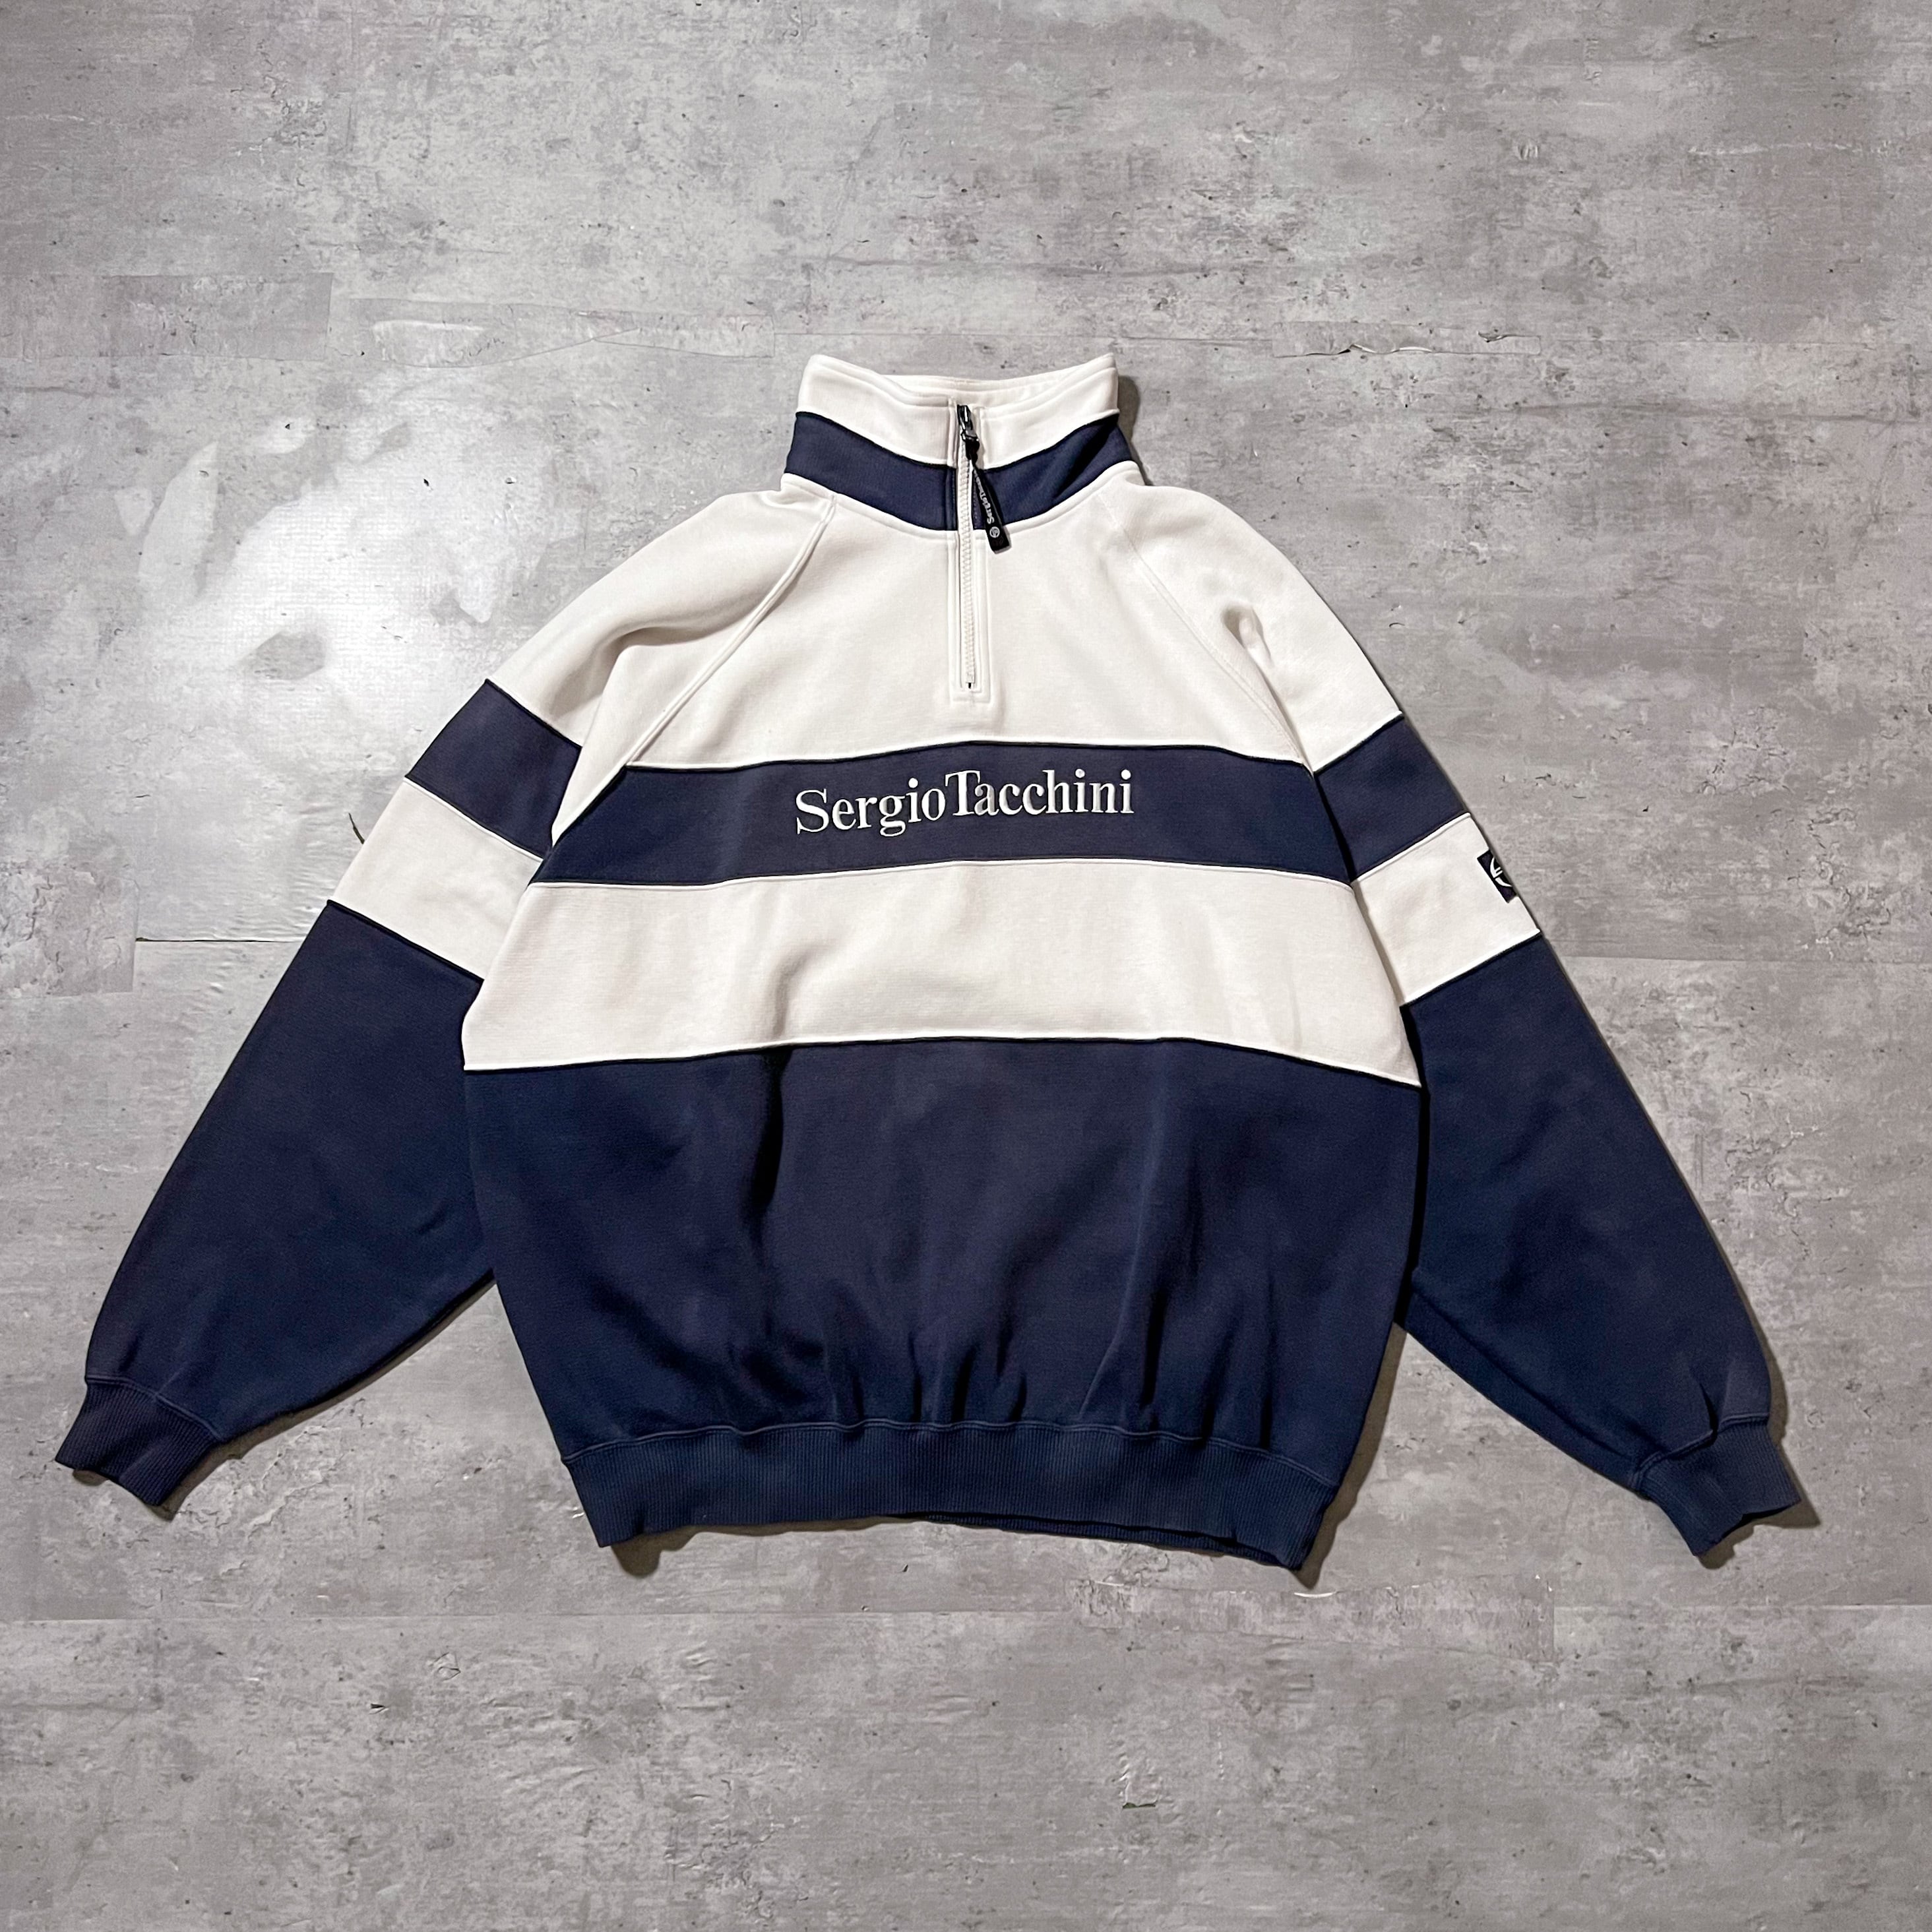 90s-01s “sergio tacchini” jersey pullover shirt 90年代 セルジオ